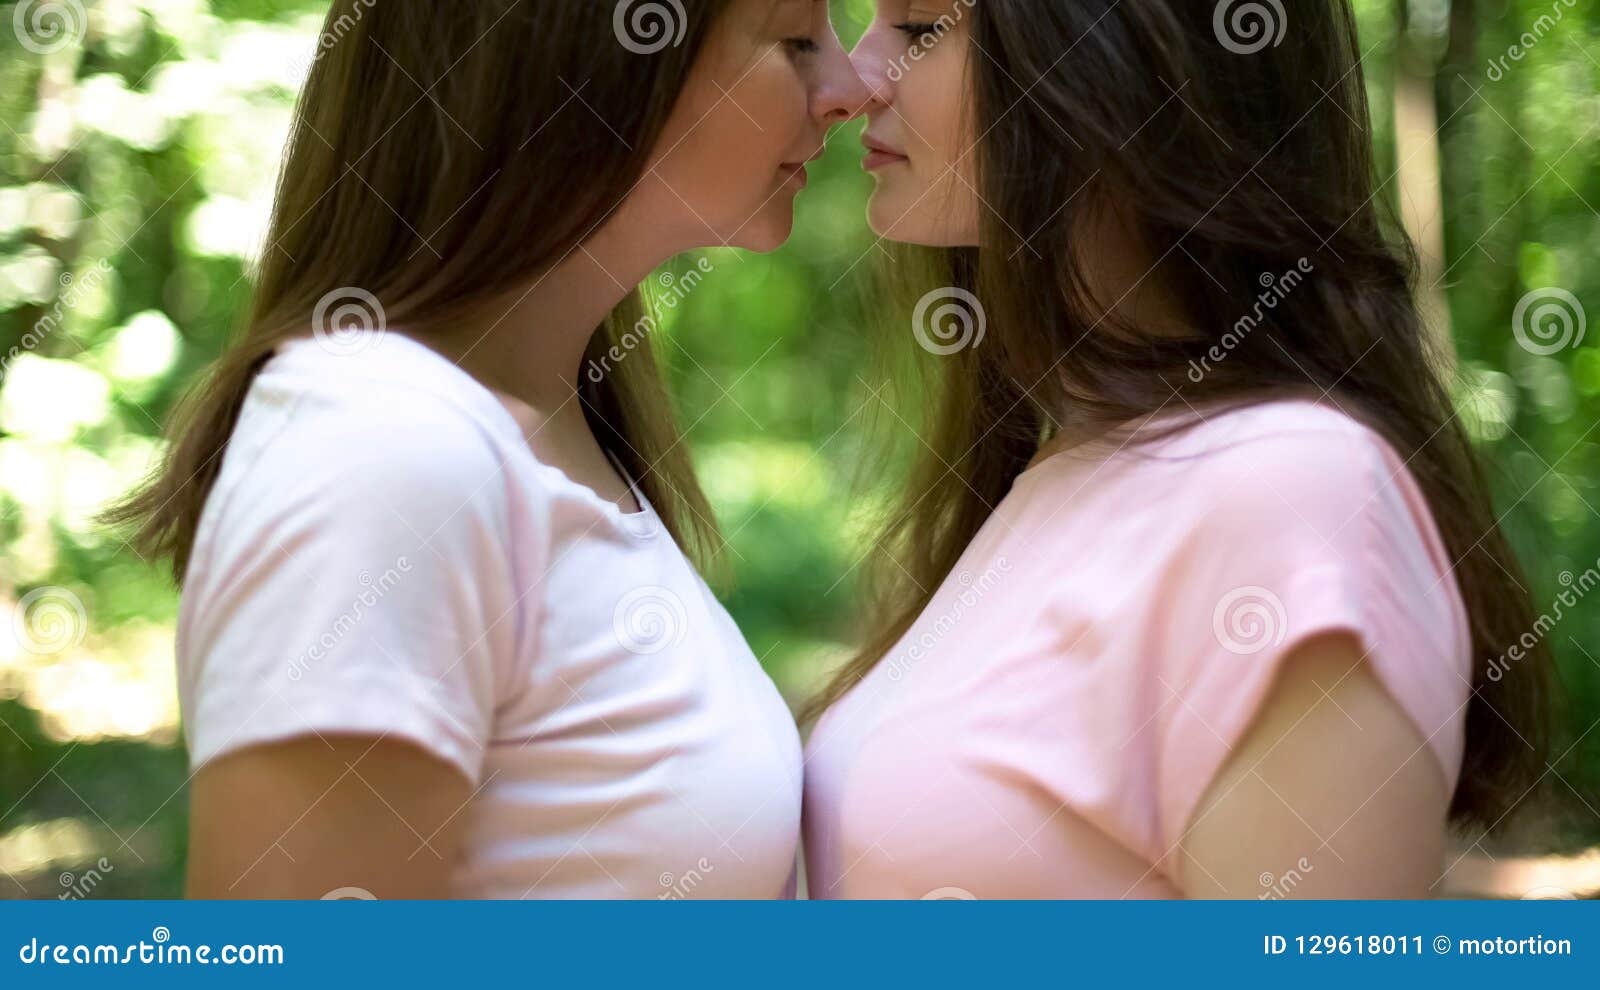 Lesbian kissing girls